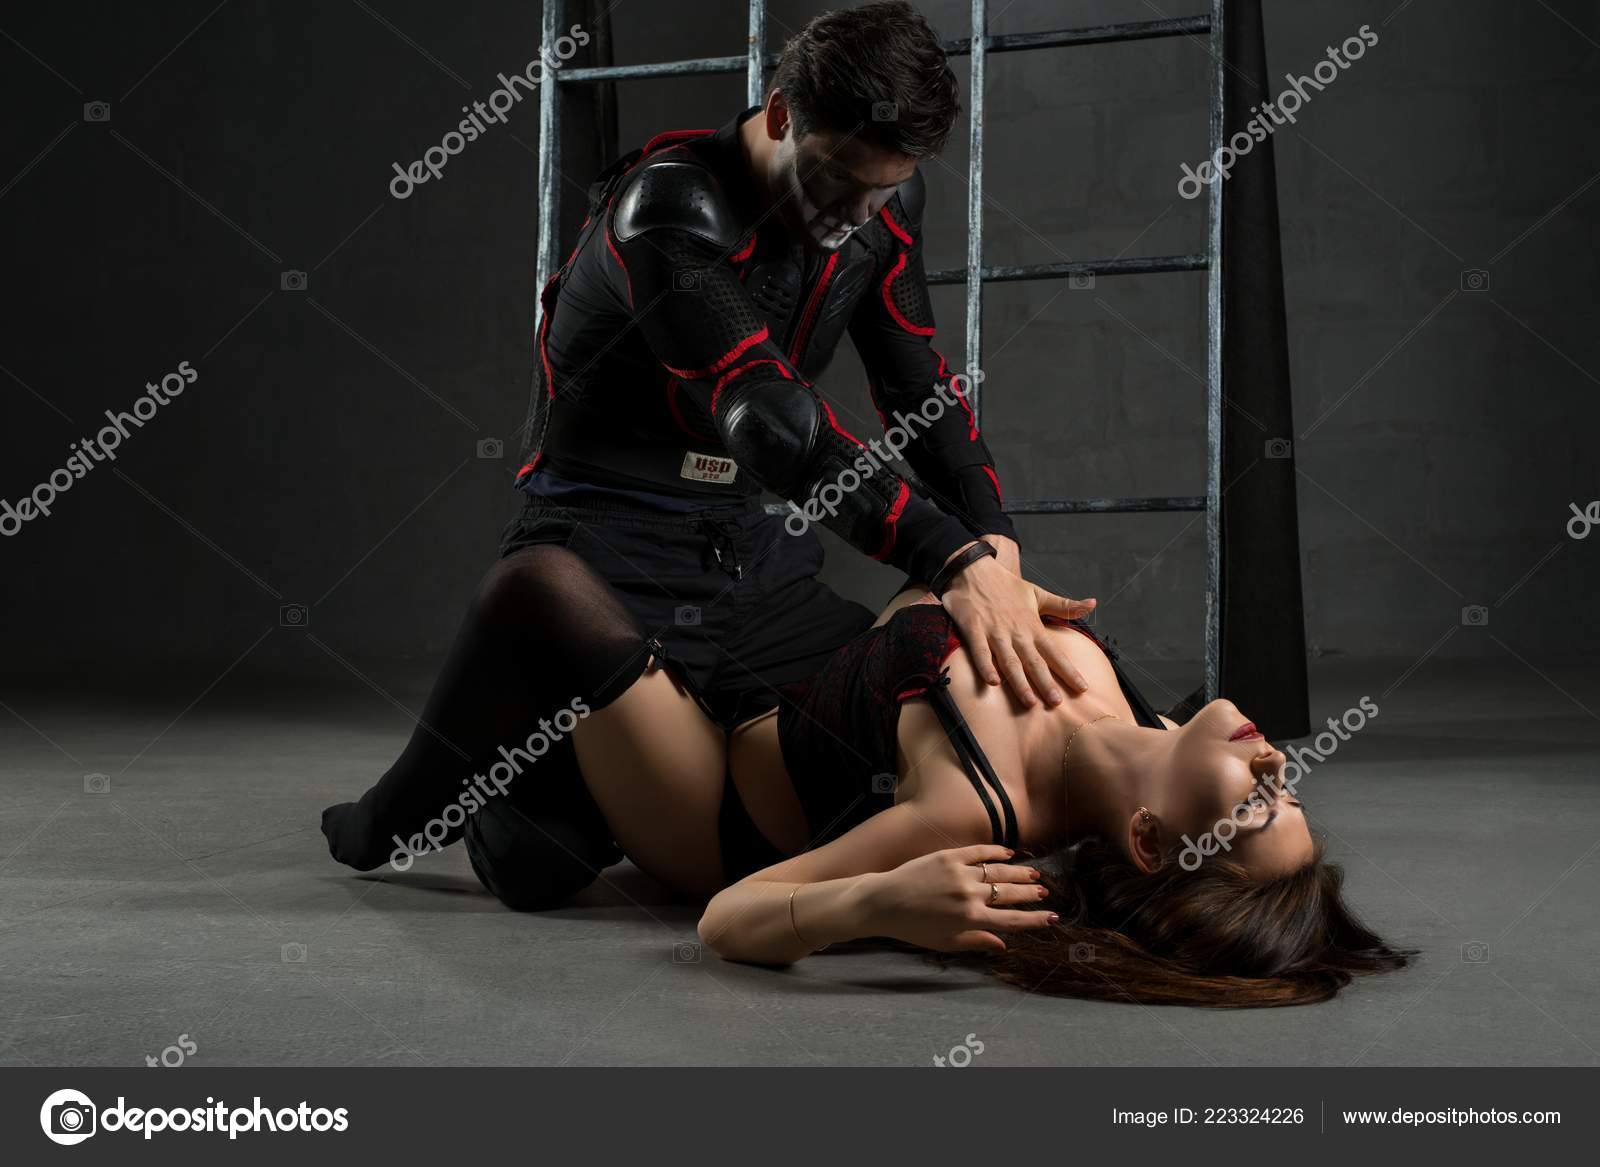 Bondage embracing in woman